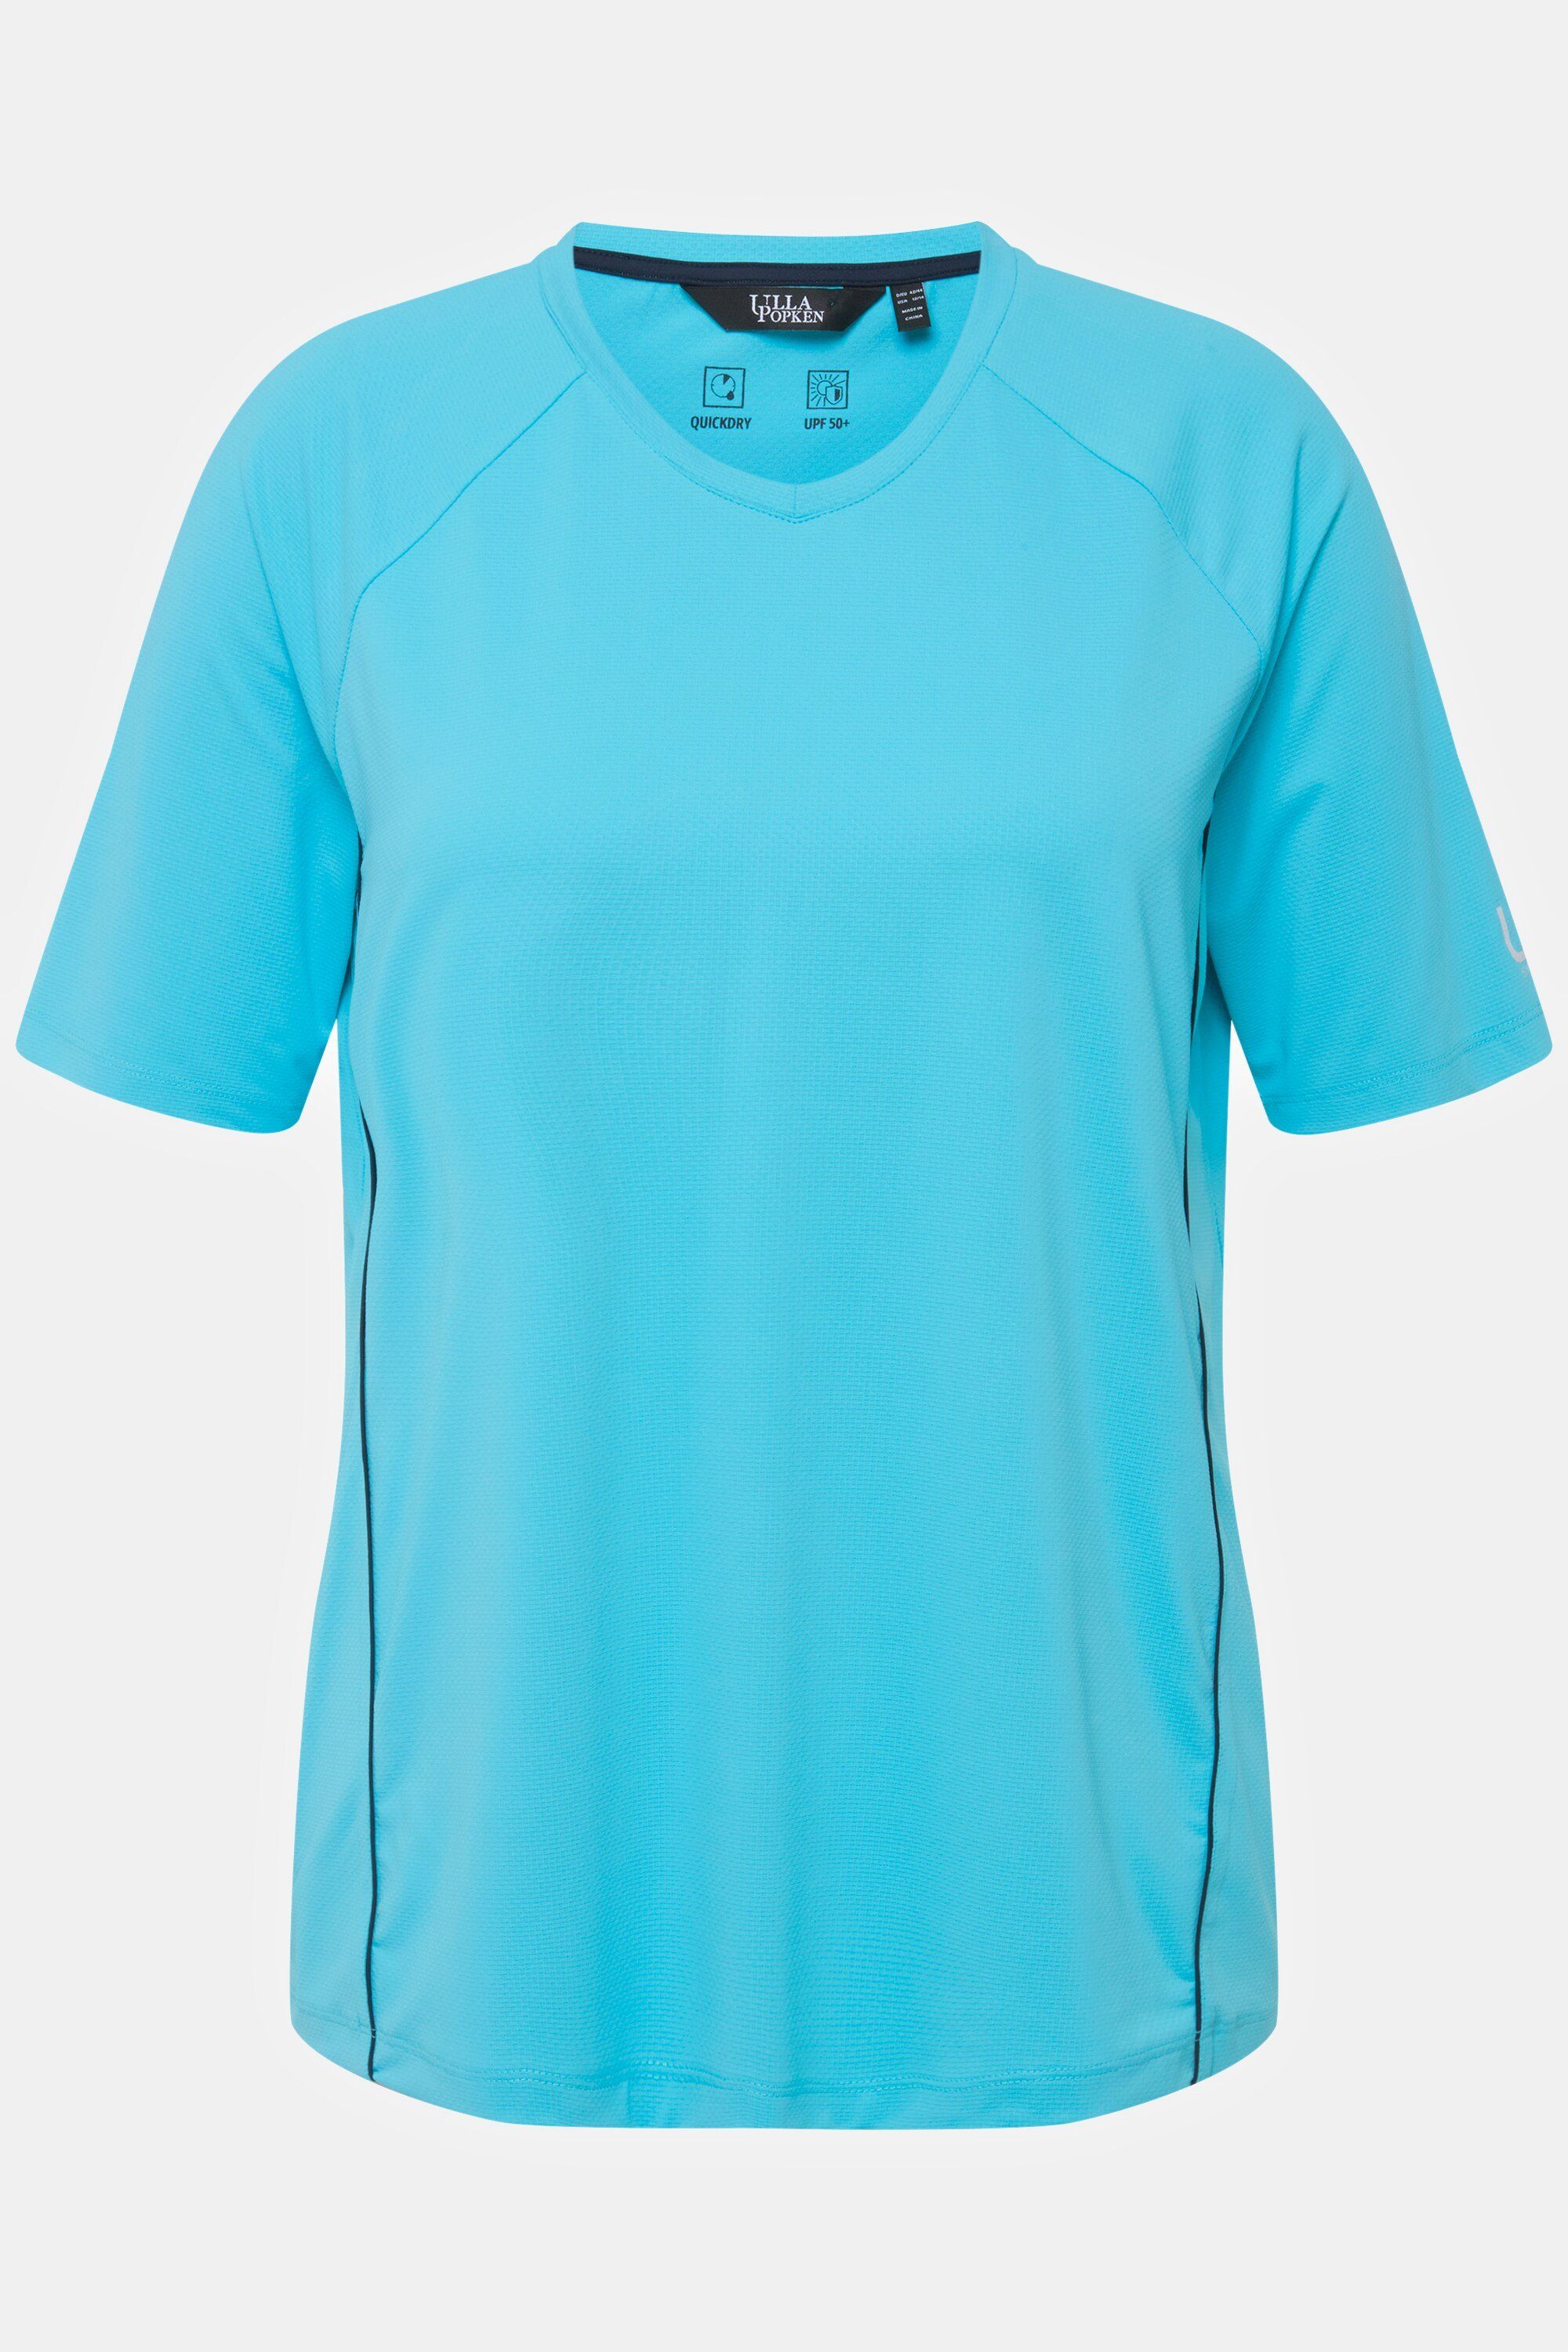 Halbarm türkis helles 50+ Rundhalsshirt V-Ausschnitt UV-Schutz T-Shirt Ulla Popken